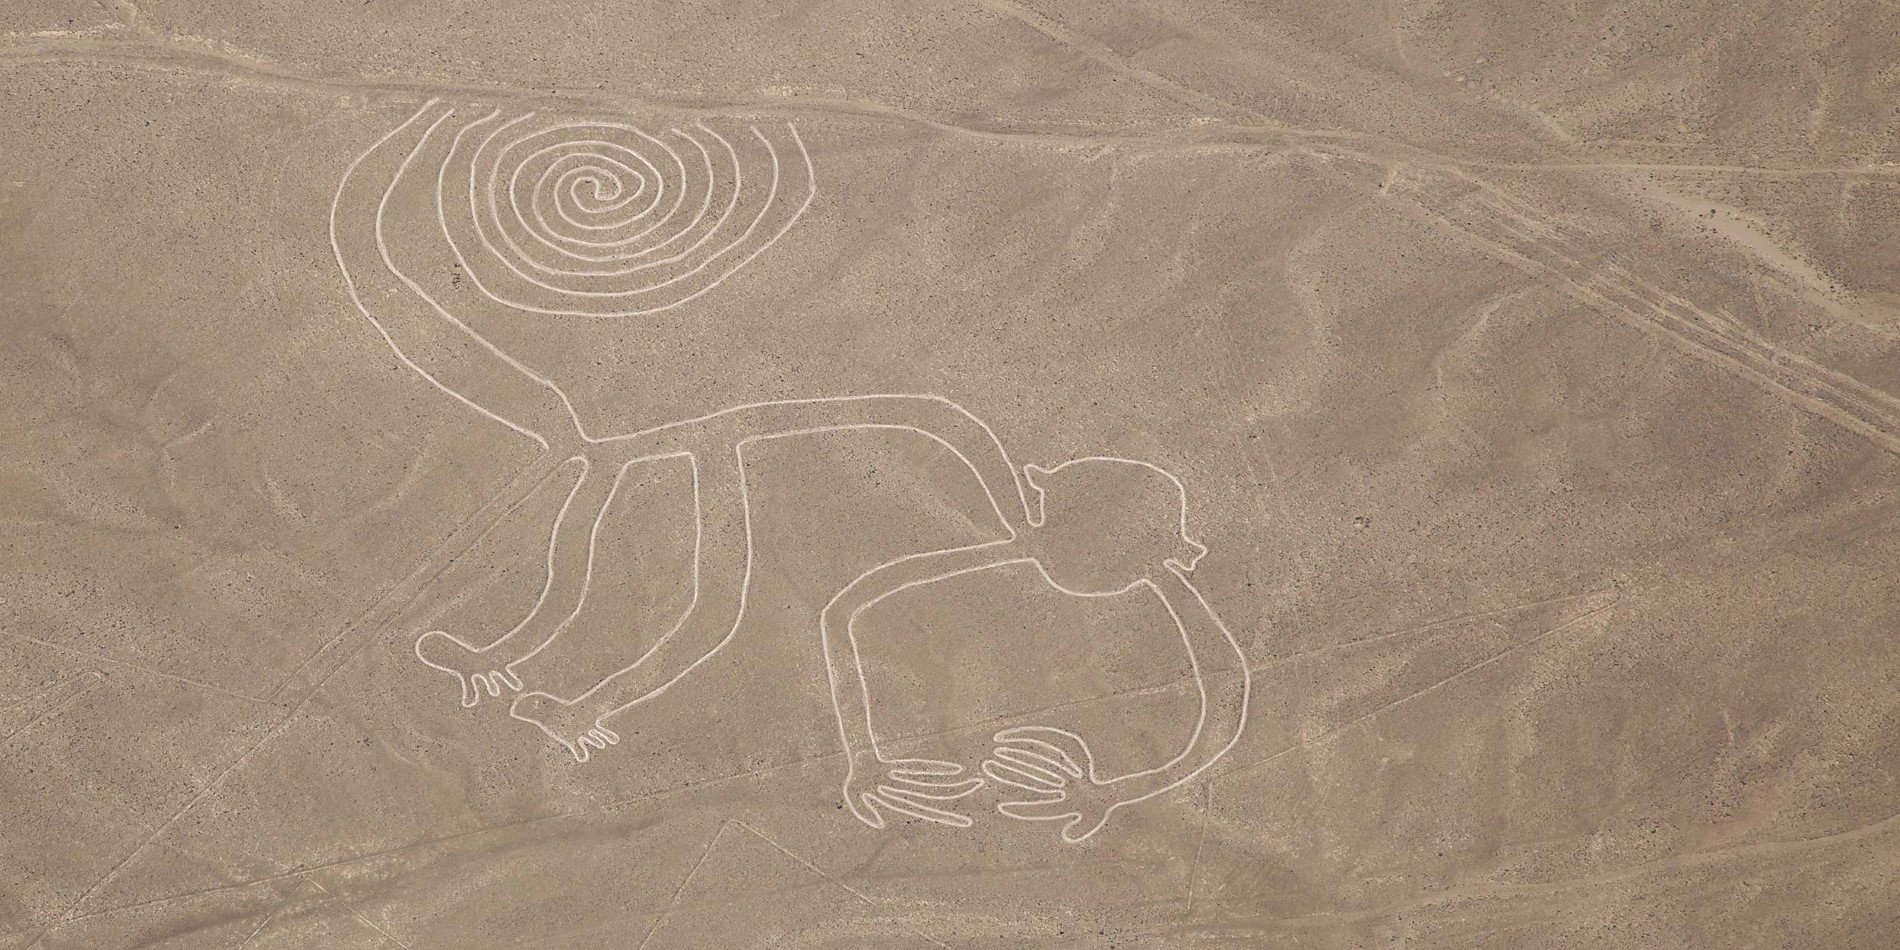 Monkey geoglyph, Nazca lines, Peru